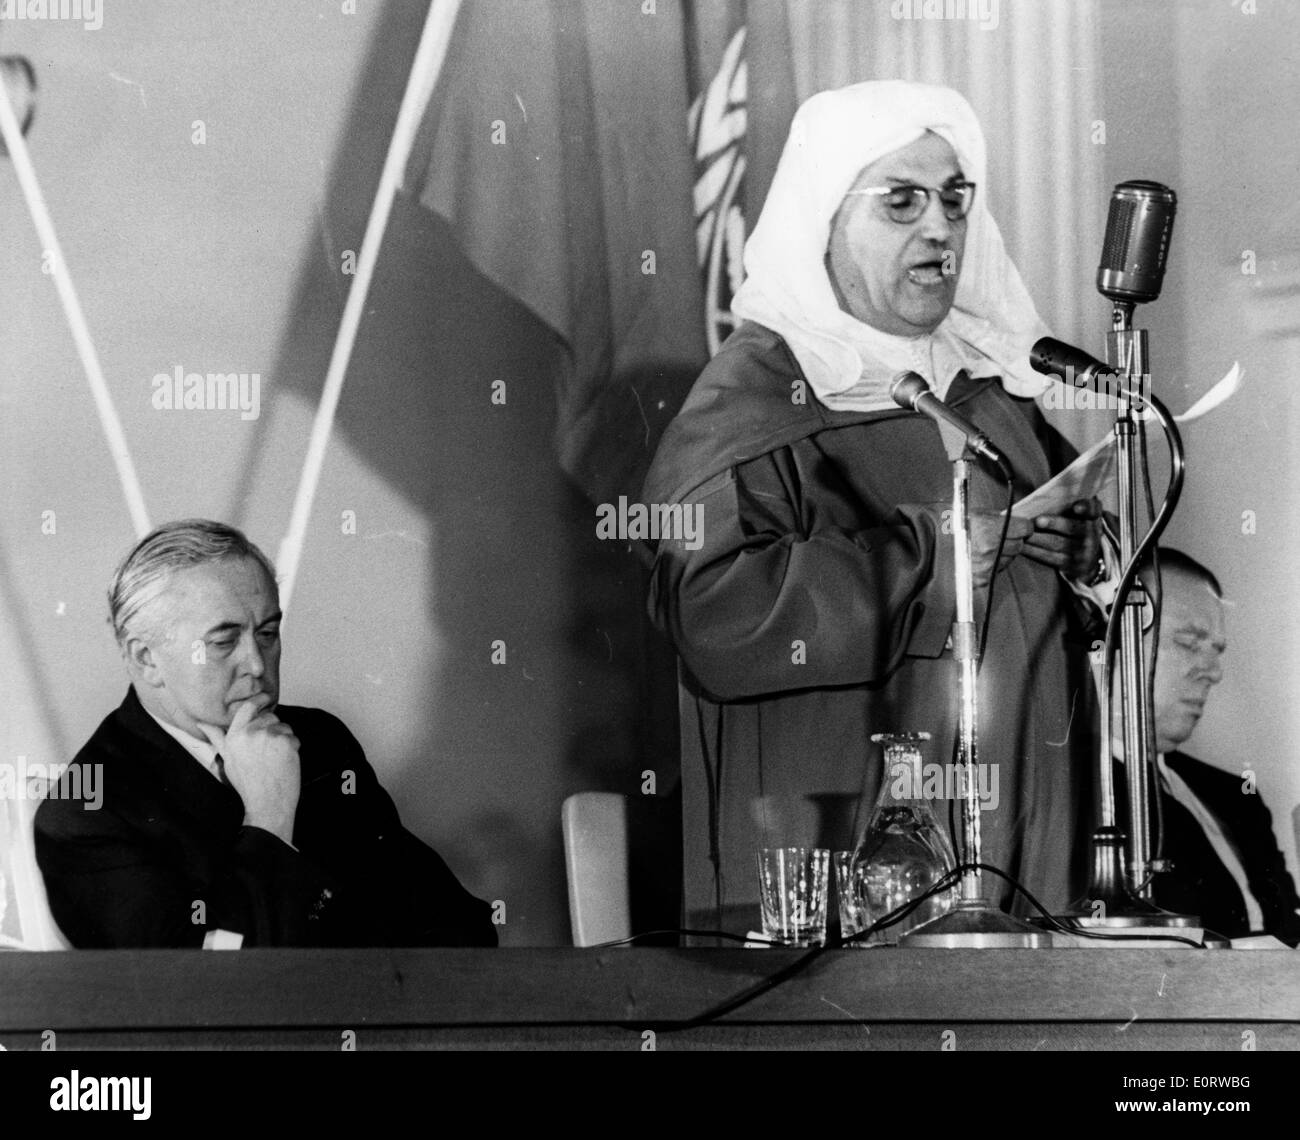 Mohammed El Fasi gives speech at celebration Stock Photo